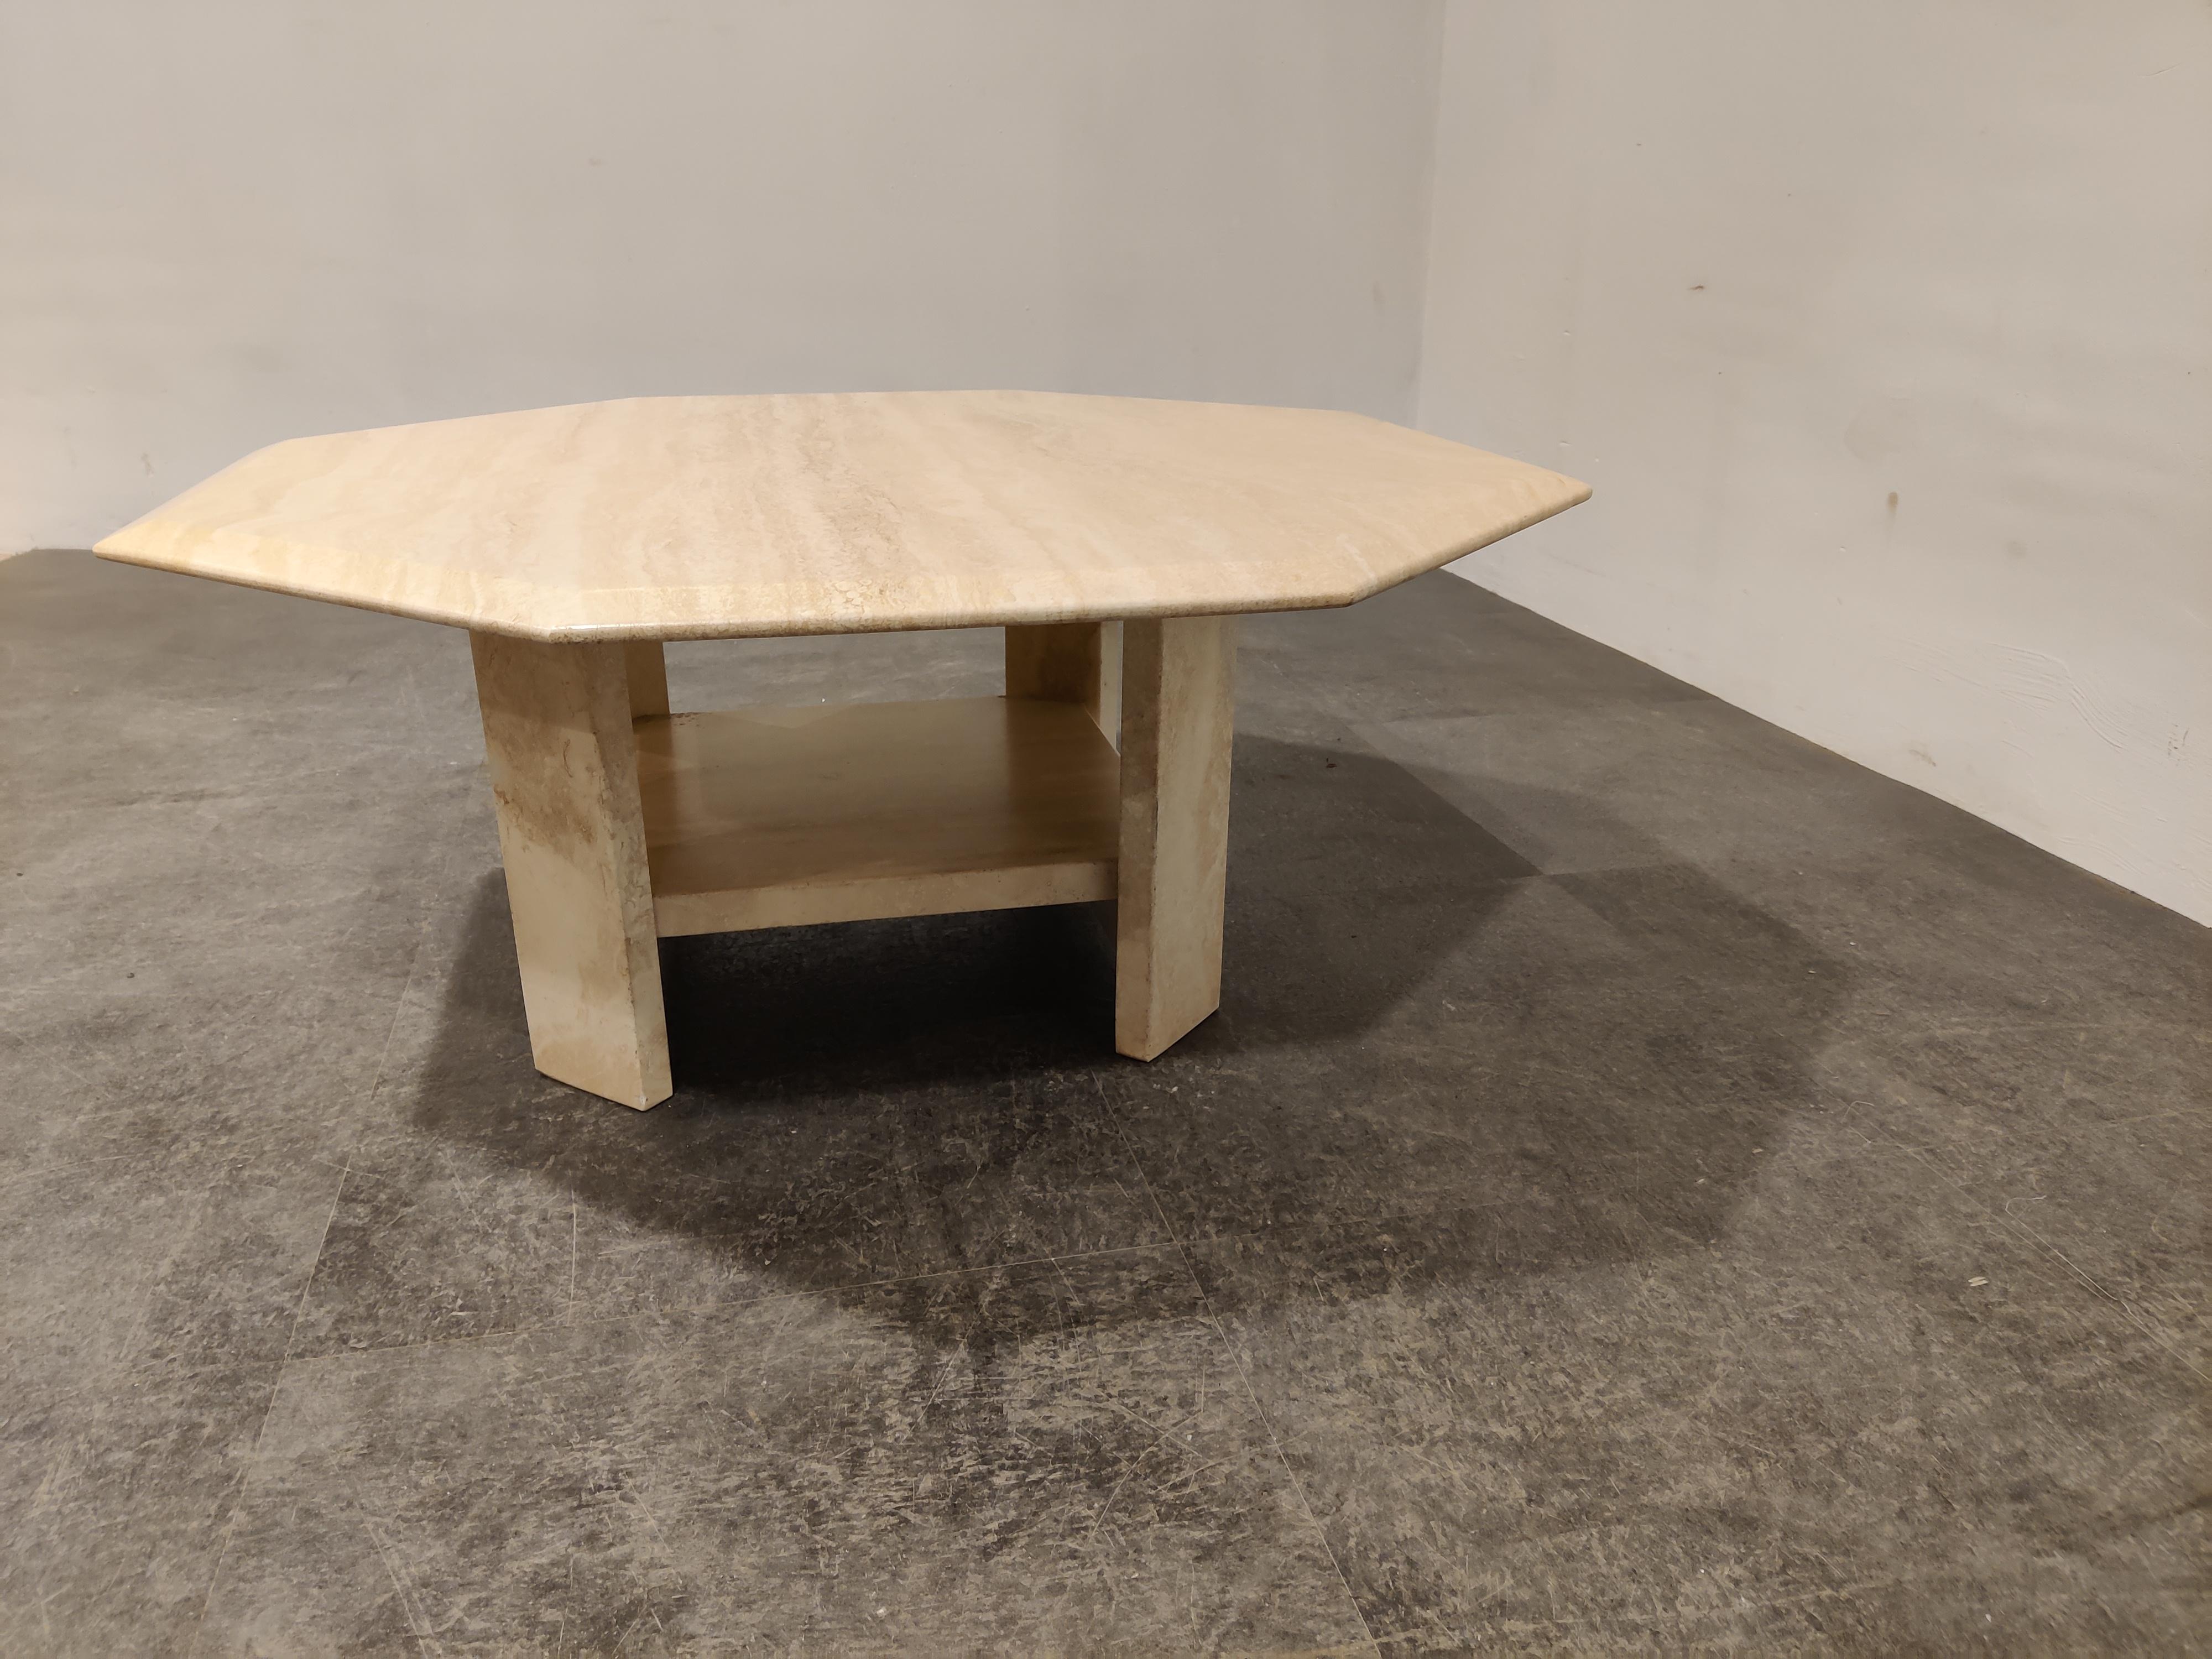 Octogonal beveled travertine stone coffee table.

Good condition.

1970s - Belgium

Dimensions
Height: 36cm/14.17